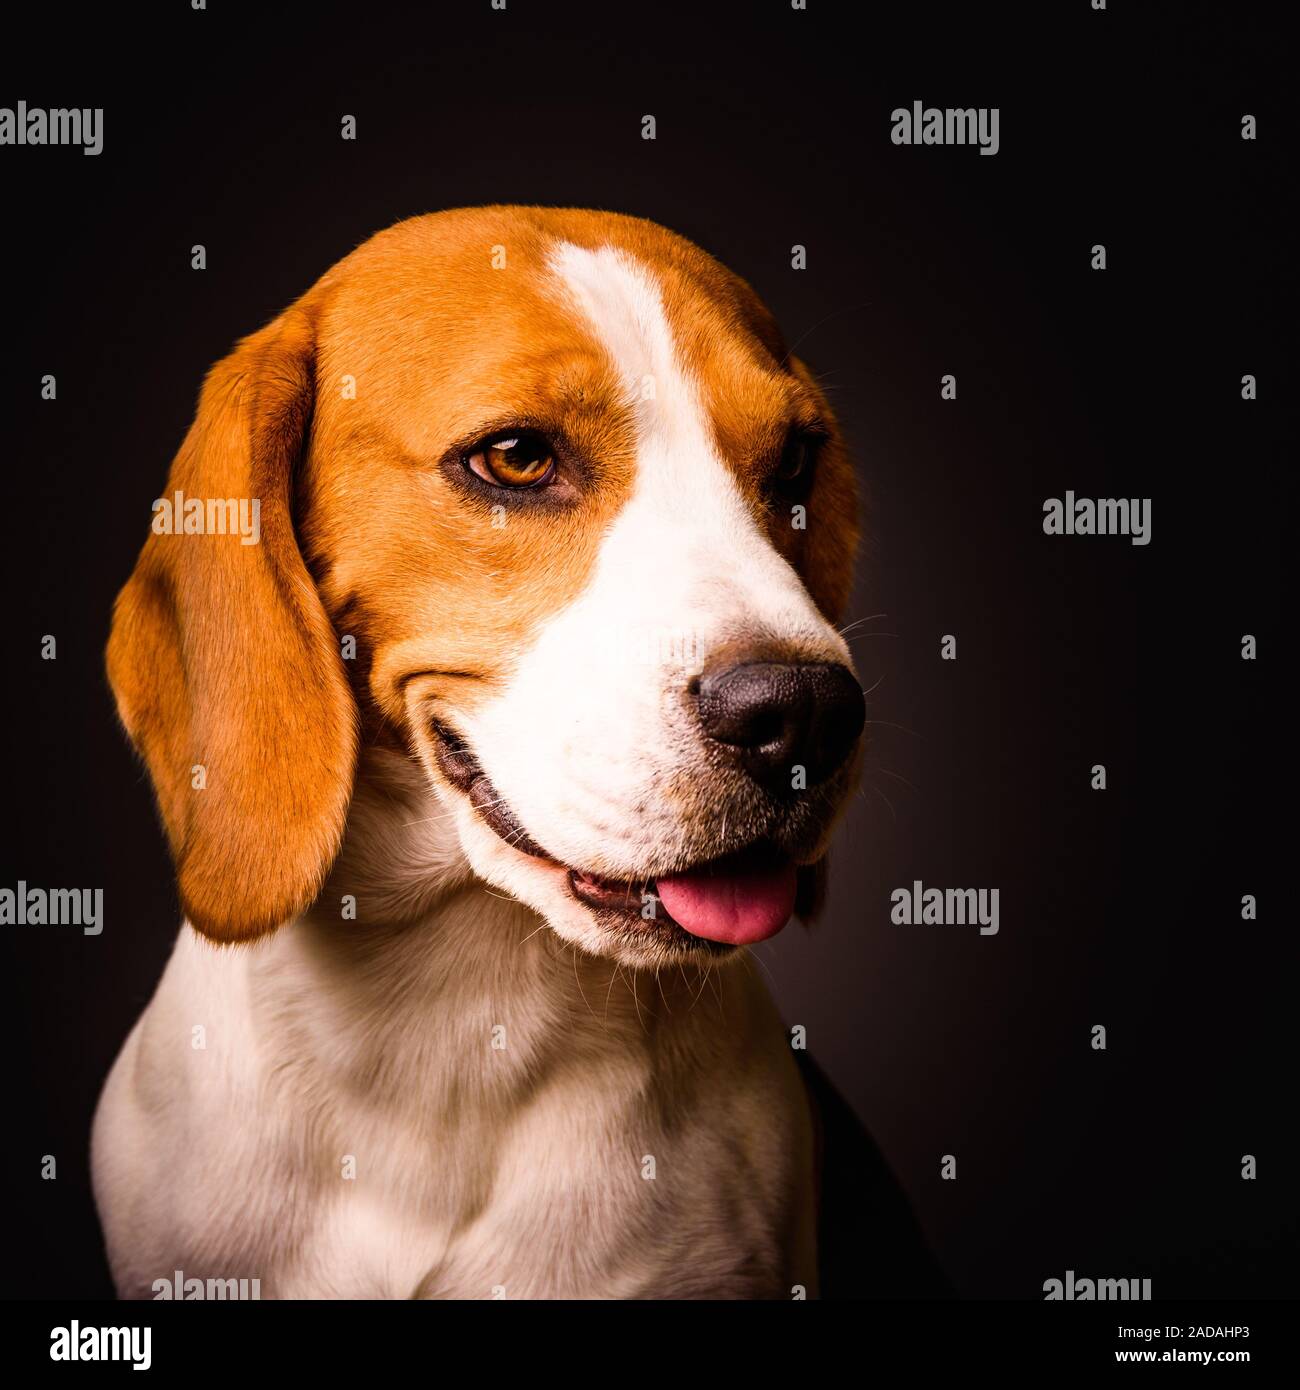 Beagle dog portrait on a black background isolated studio closeup detail like painting Stock Photo